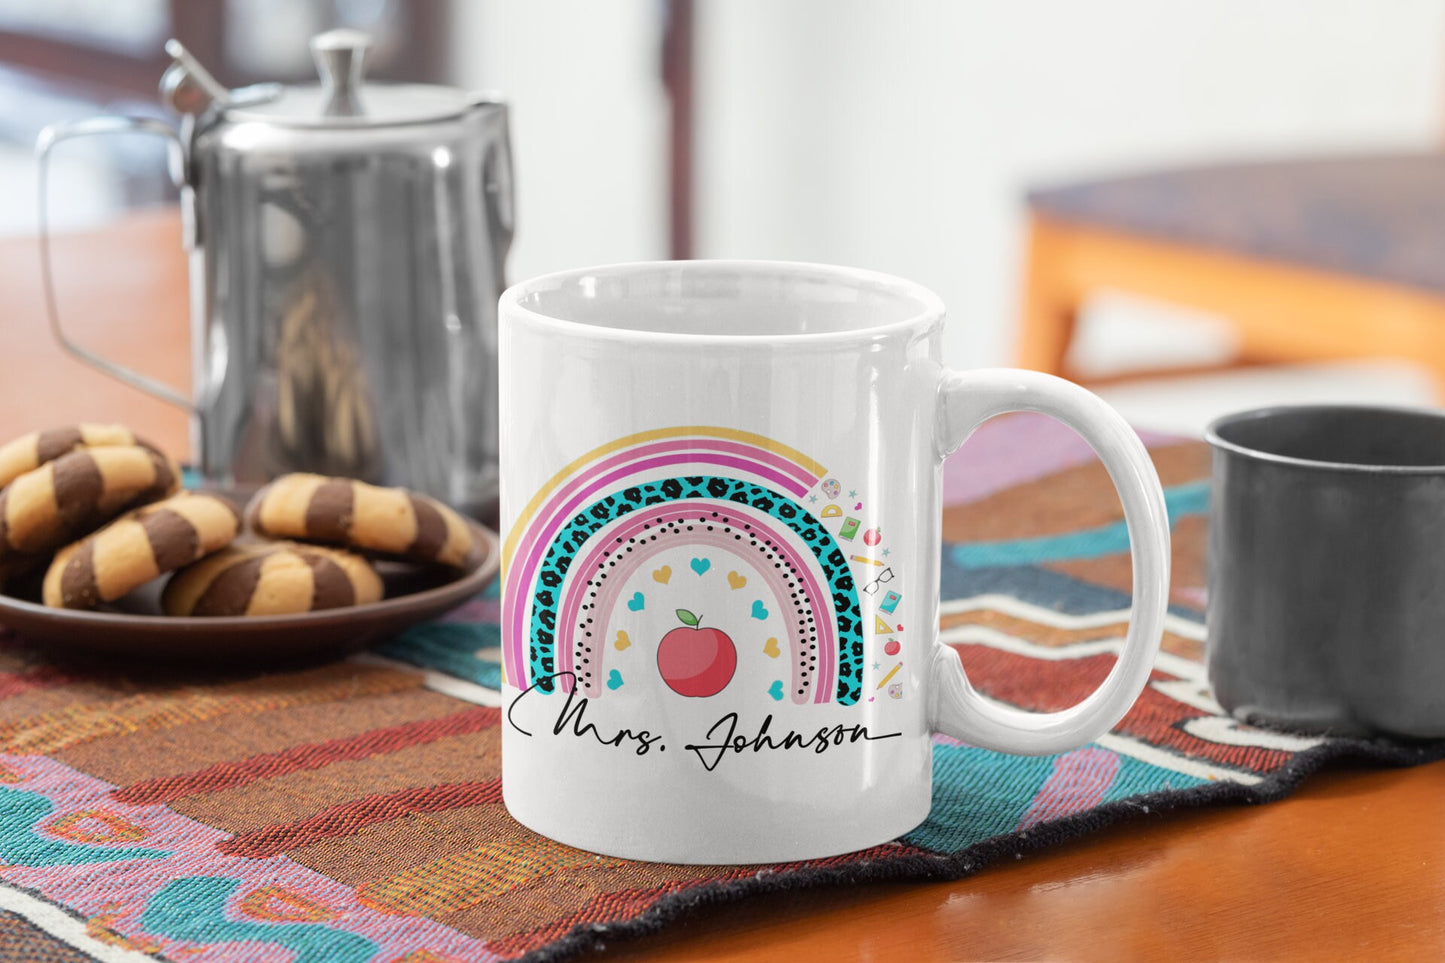 Personalised Teacher Mug Rainbow Thank you Teacher Name & Message Mug, Tea Coffee Teaching assistant Mug Gift